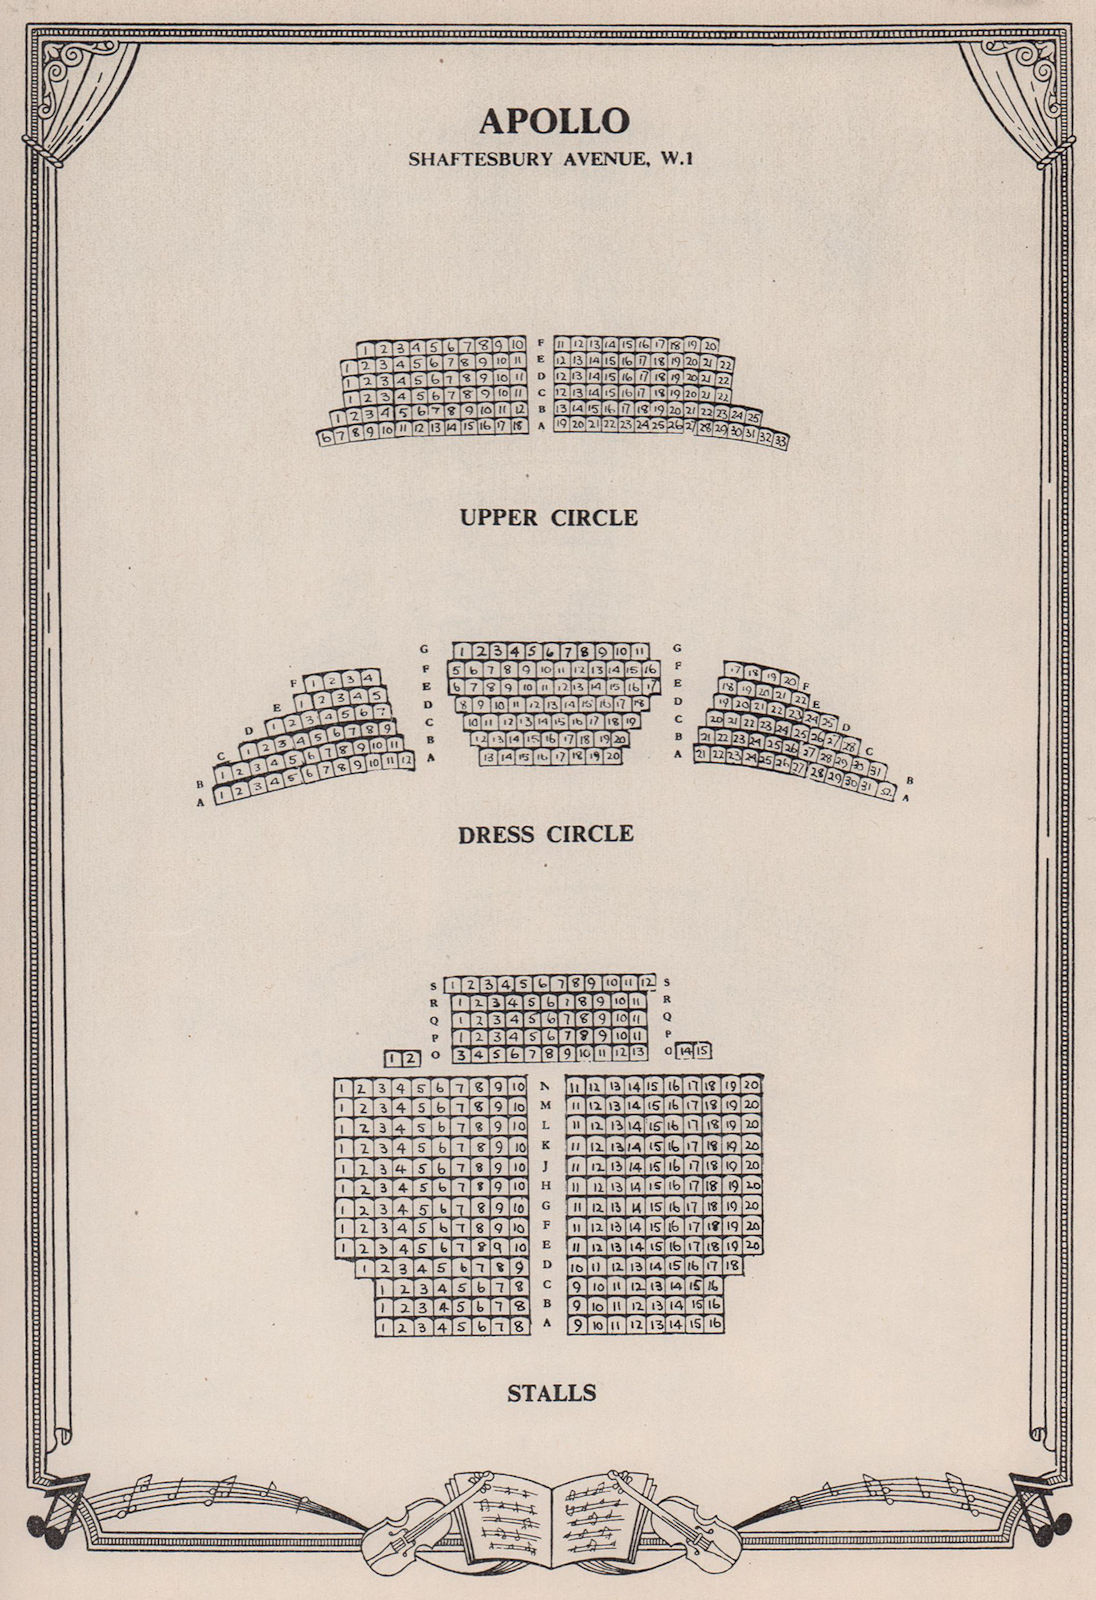 Associate Product Apollo Theatre, Shaftesbury Avenue, London. Vintage seating plan 1955 print